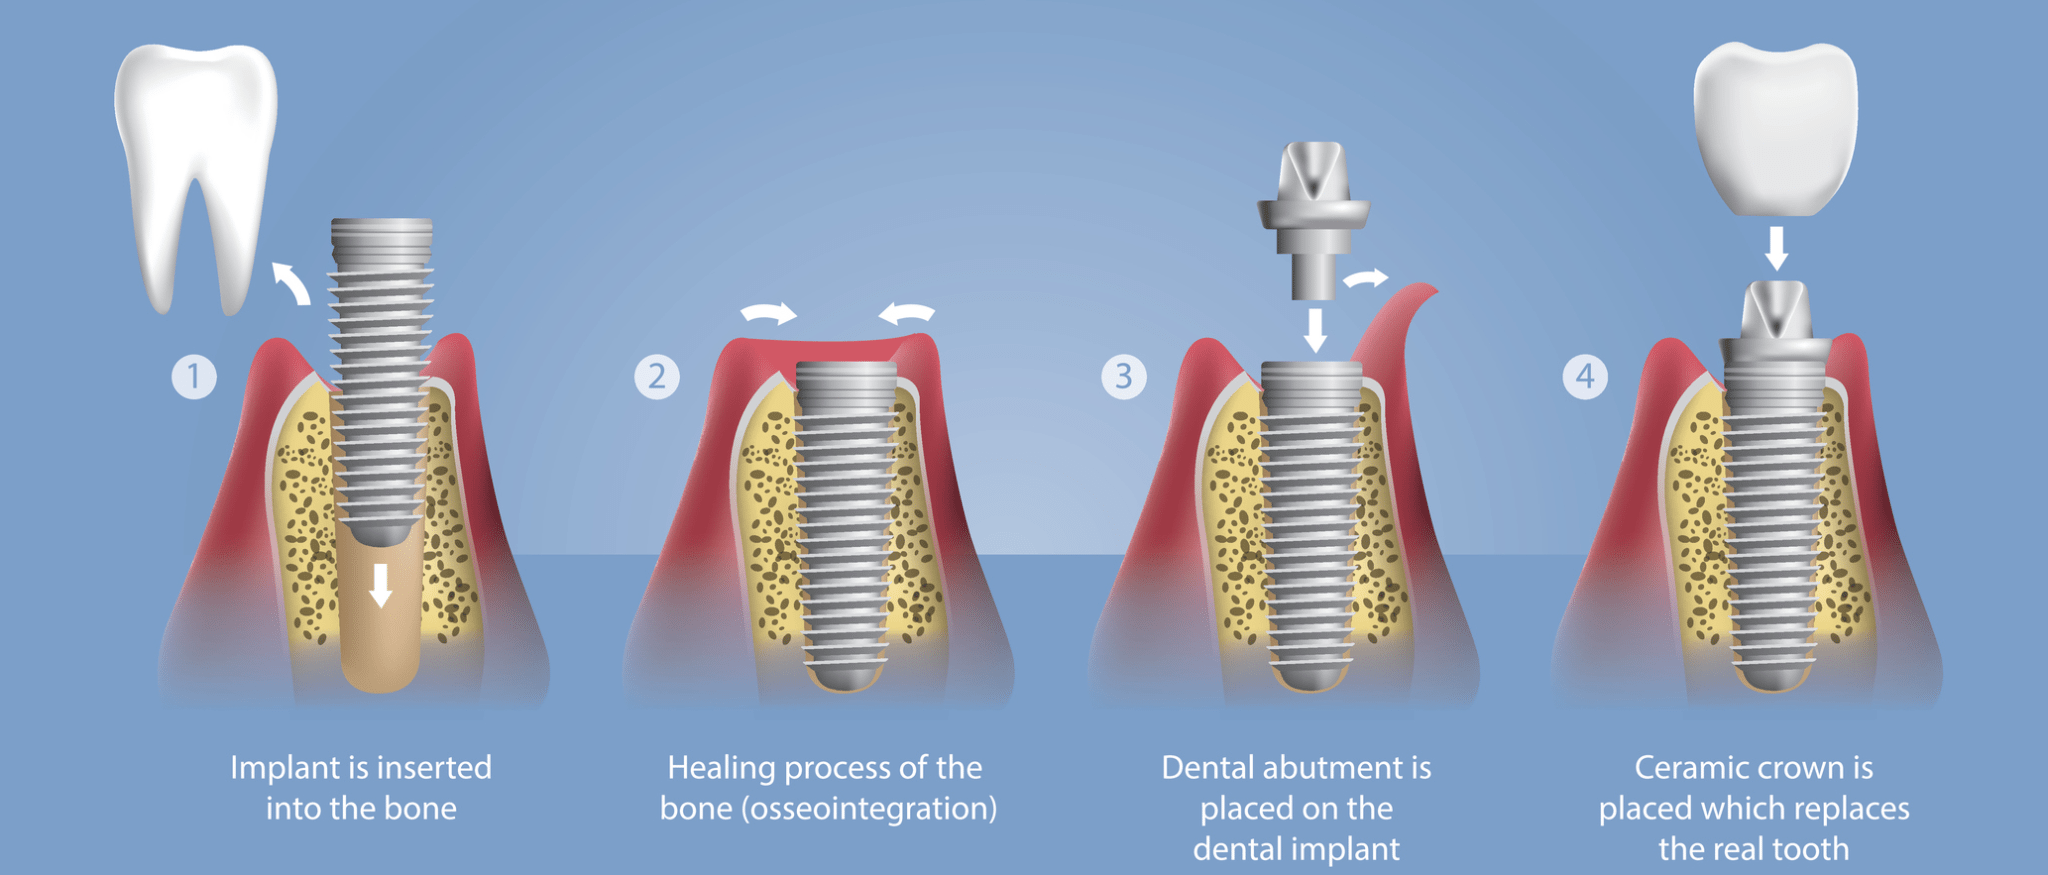 dental implant procedure for missing teeth implant dentist Florence SC 